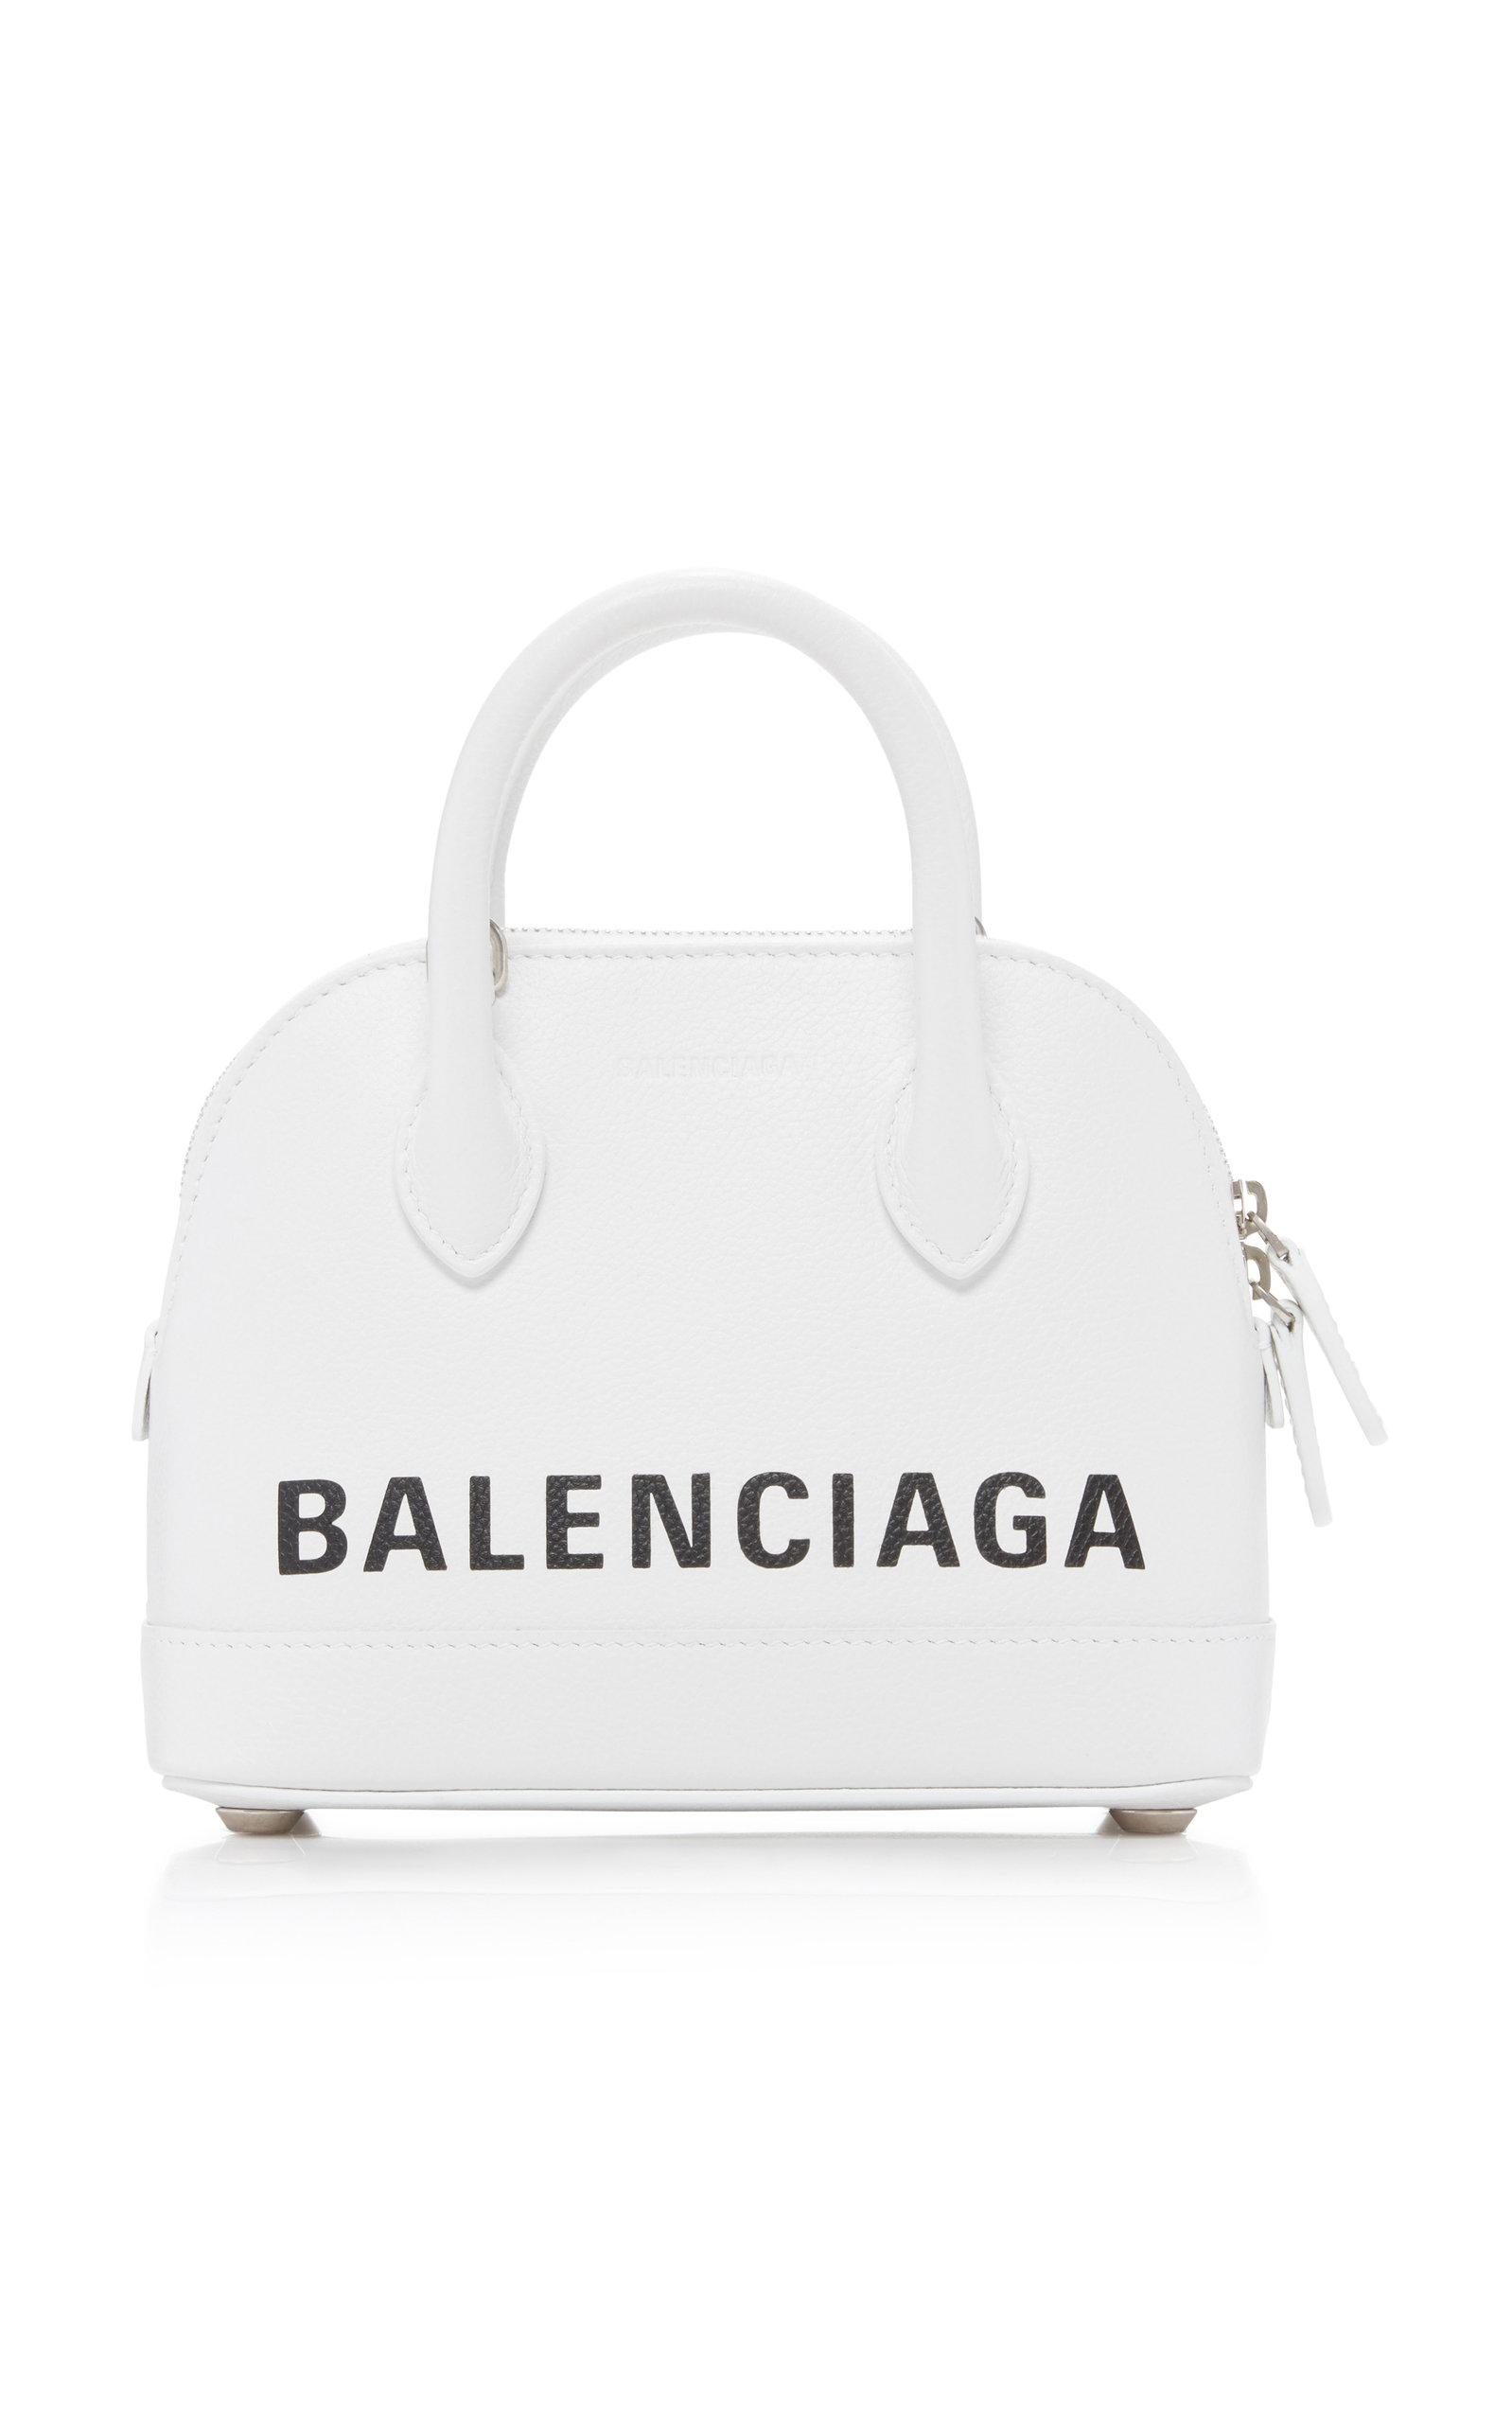 Balenciaga Leather Ville Xxs Top Handle Bag in White/Black (White 